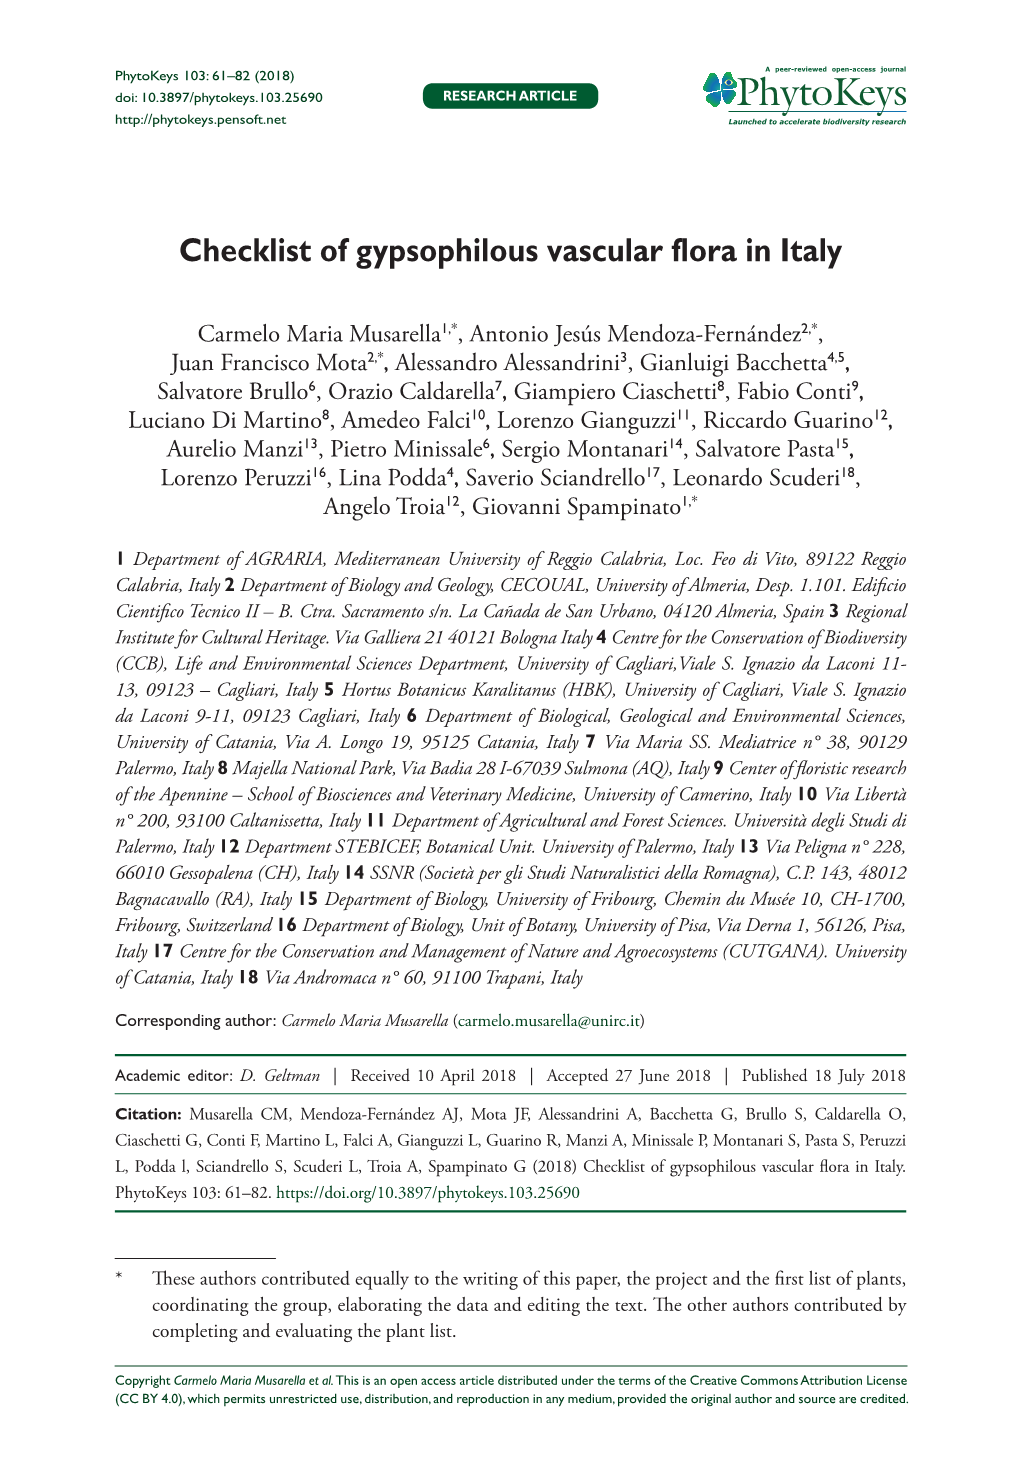 Checklist of Gypsophilous Vascular Flora in Italy